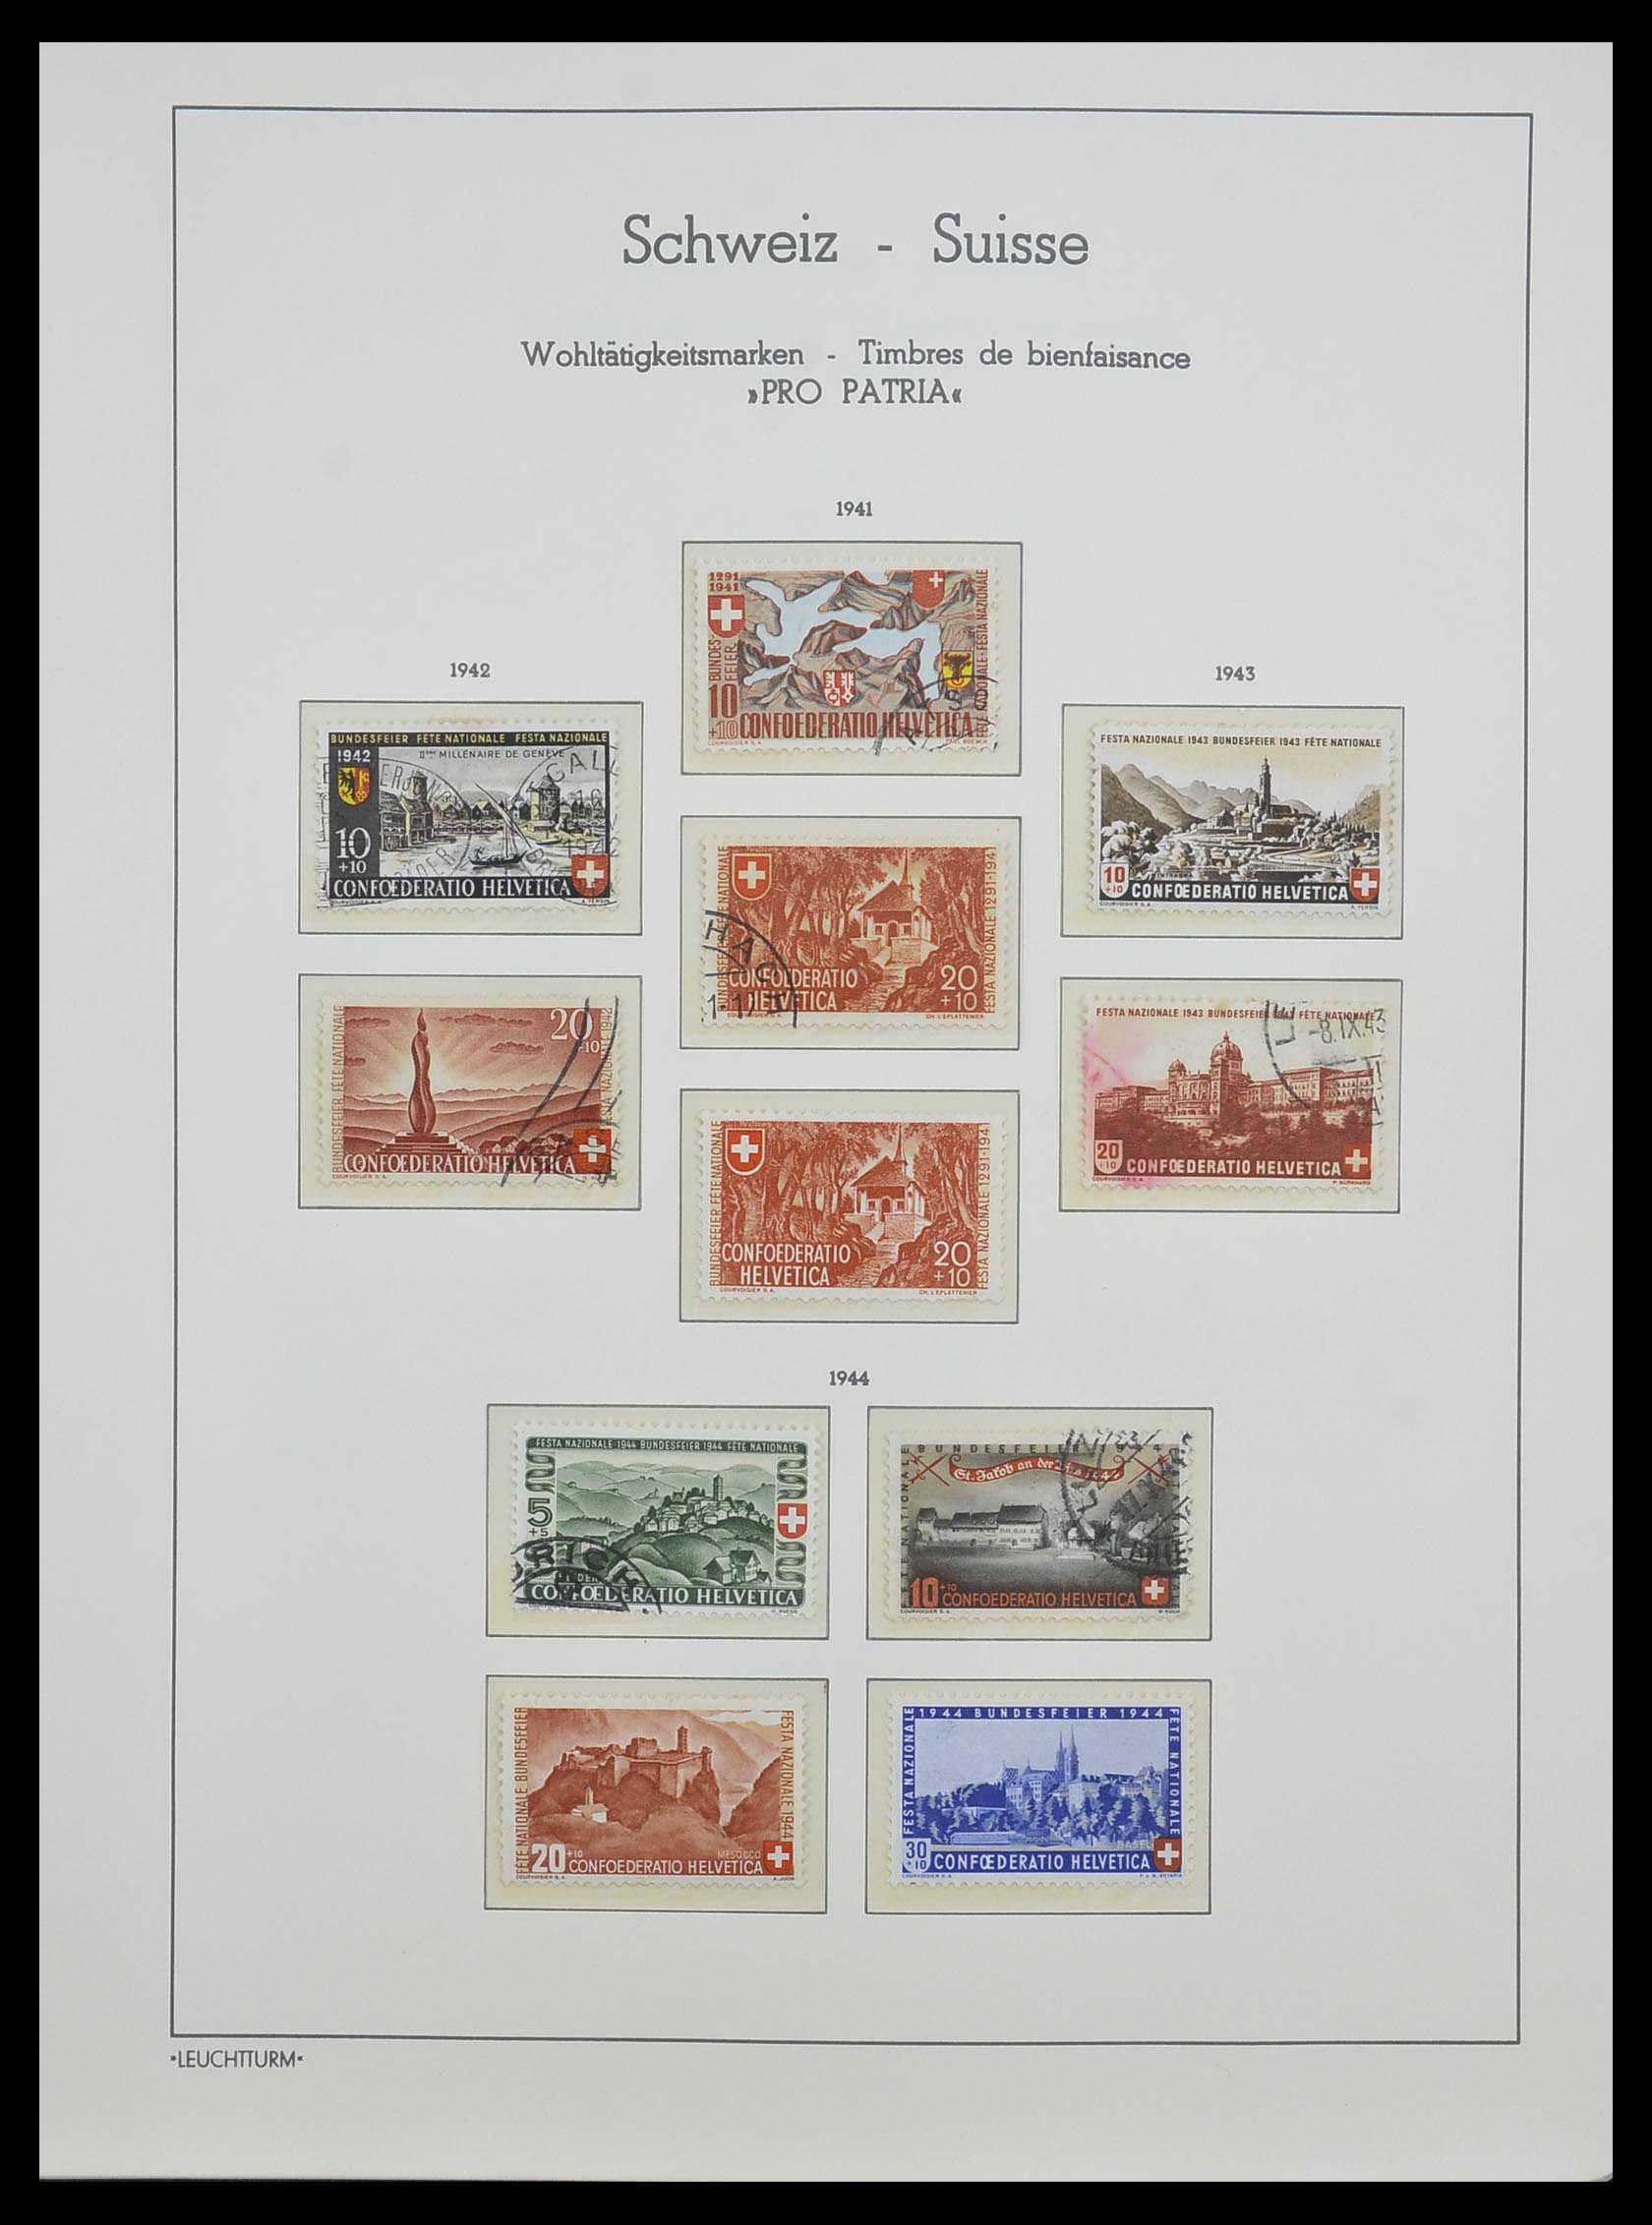 33603 042 - Stamp collection 33603 Switzerland 1862-1976.